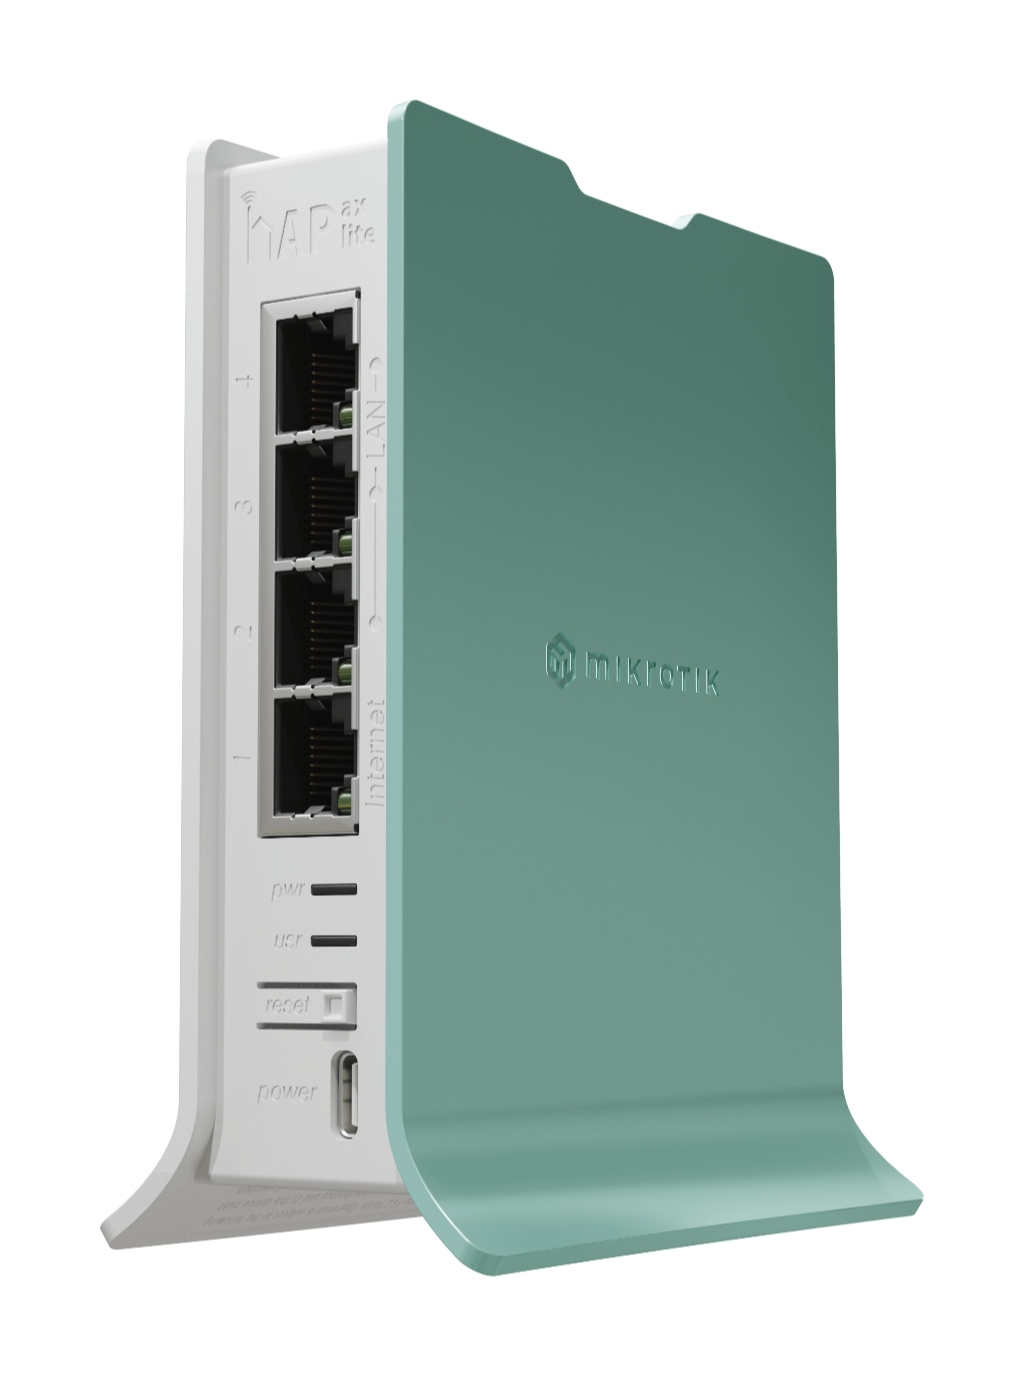 -MikroTik hAP ax lite - L41G-2axD 2.4GHz WiFi6 AP Firewall Router